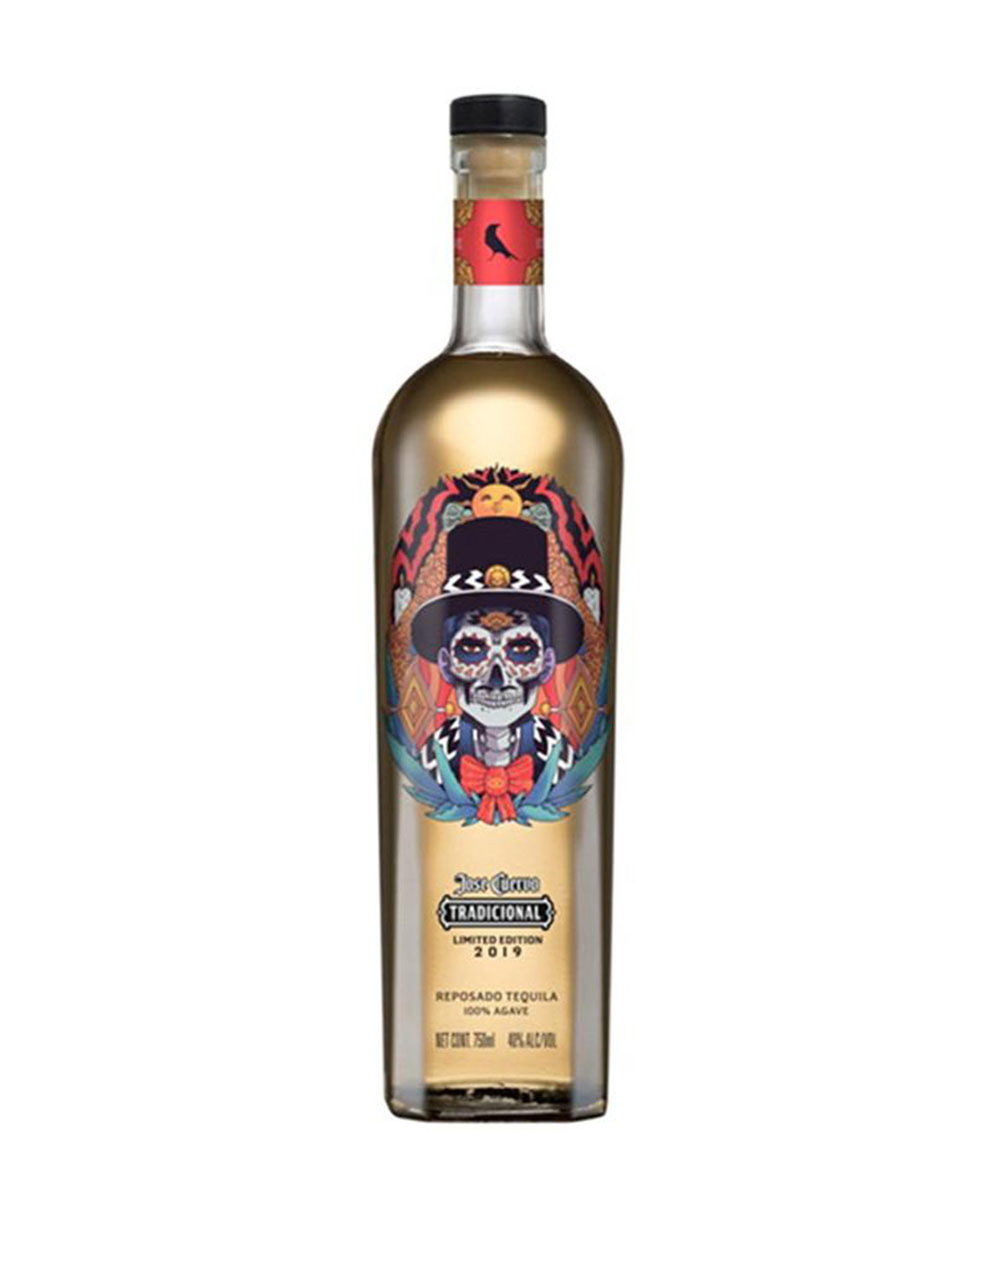 Jose Cuervo Tradicional Reposado Day of the Dead Limited Edition Tequila